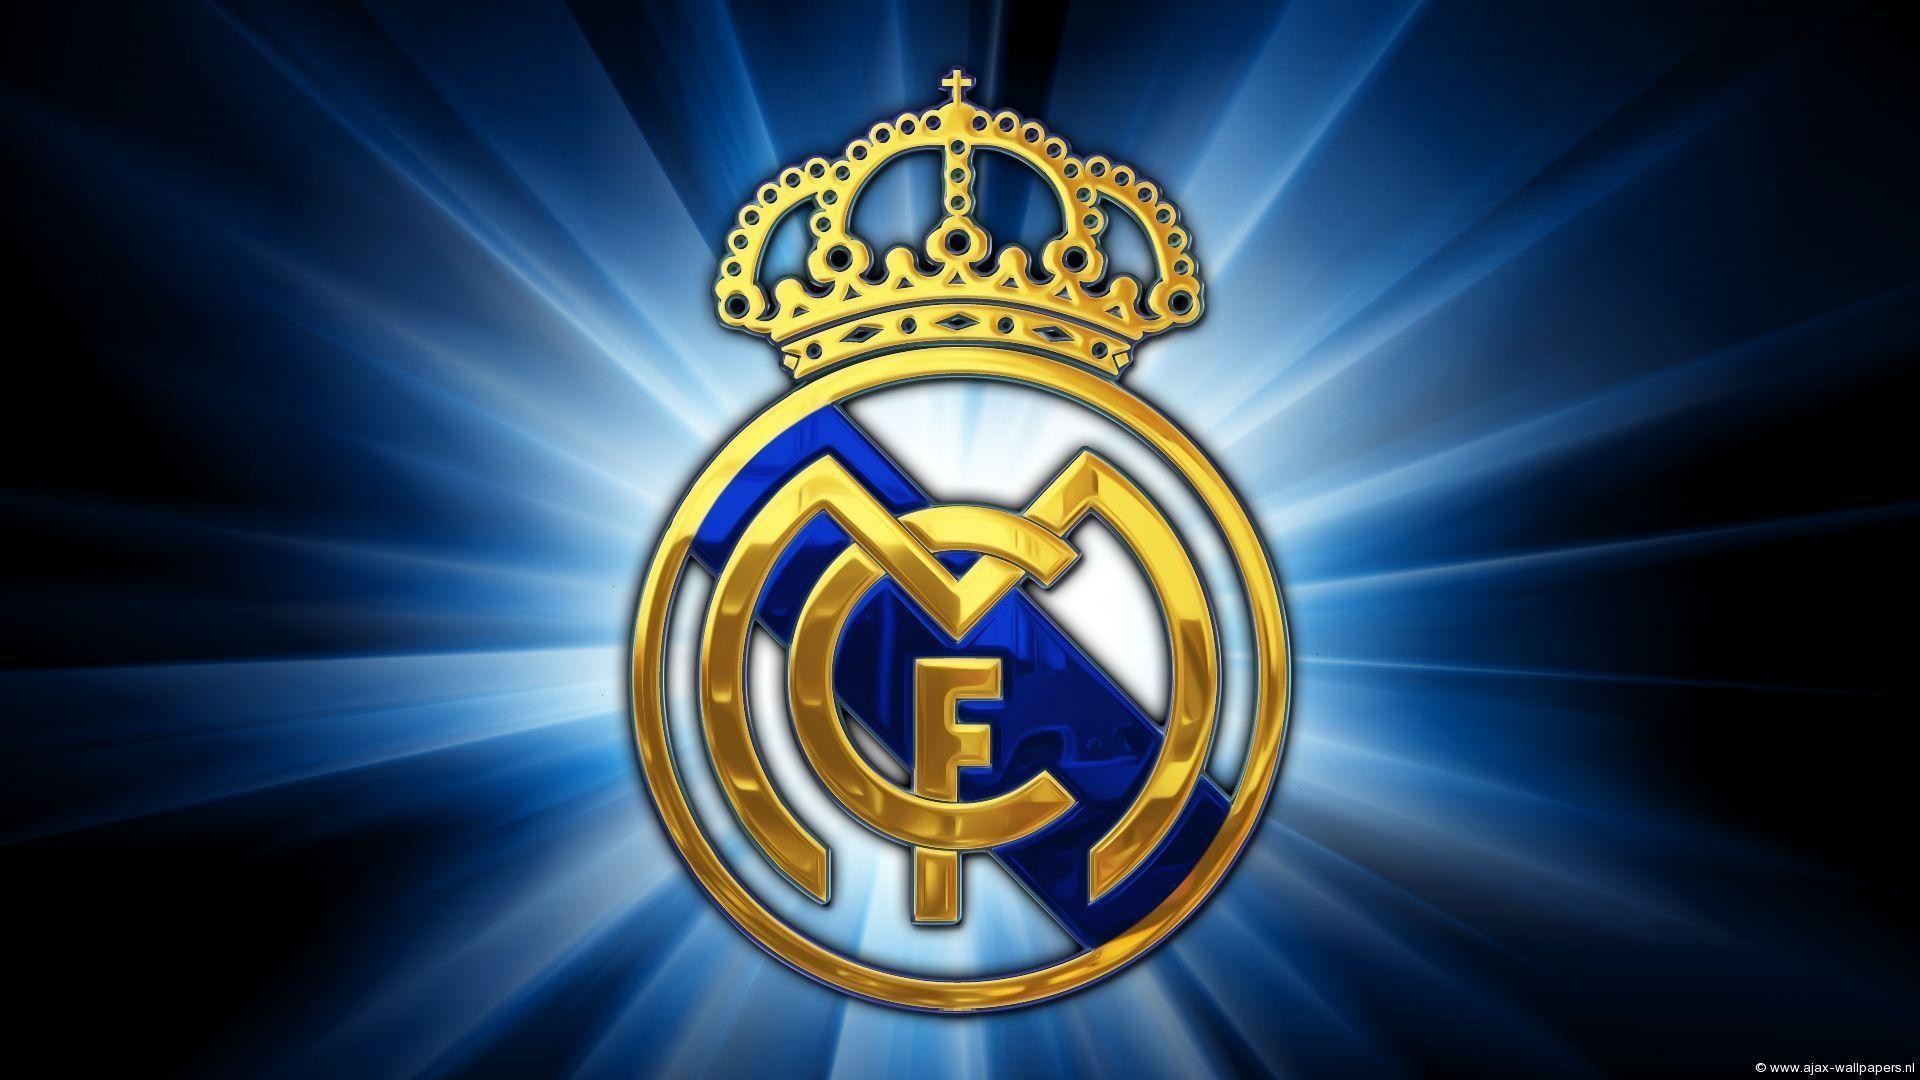 1920x1080 Real Madrid Logo Wallpaper, iPhone Wallpaper, Facebook Cover .